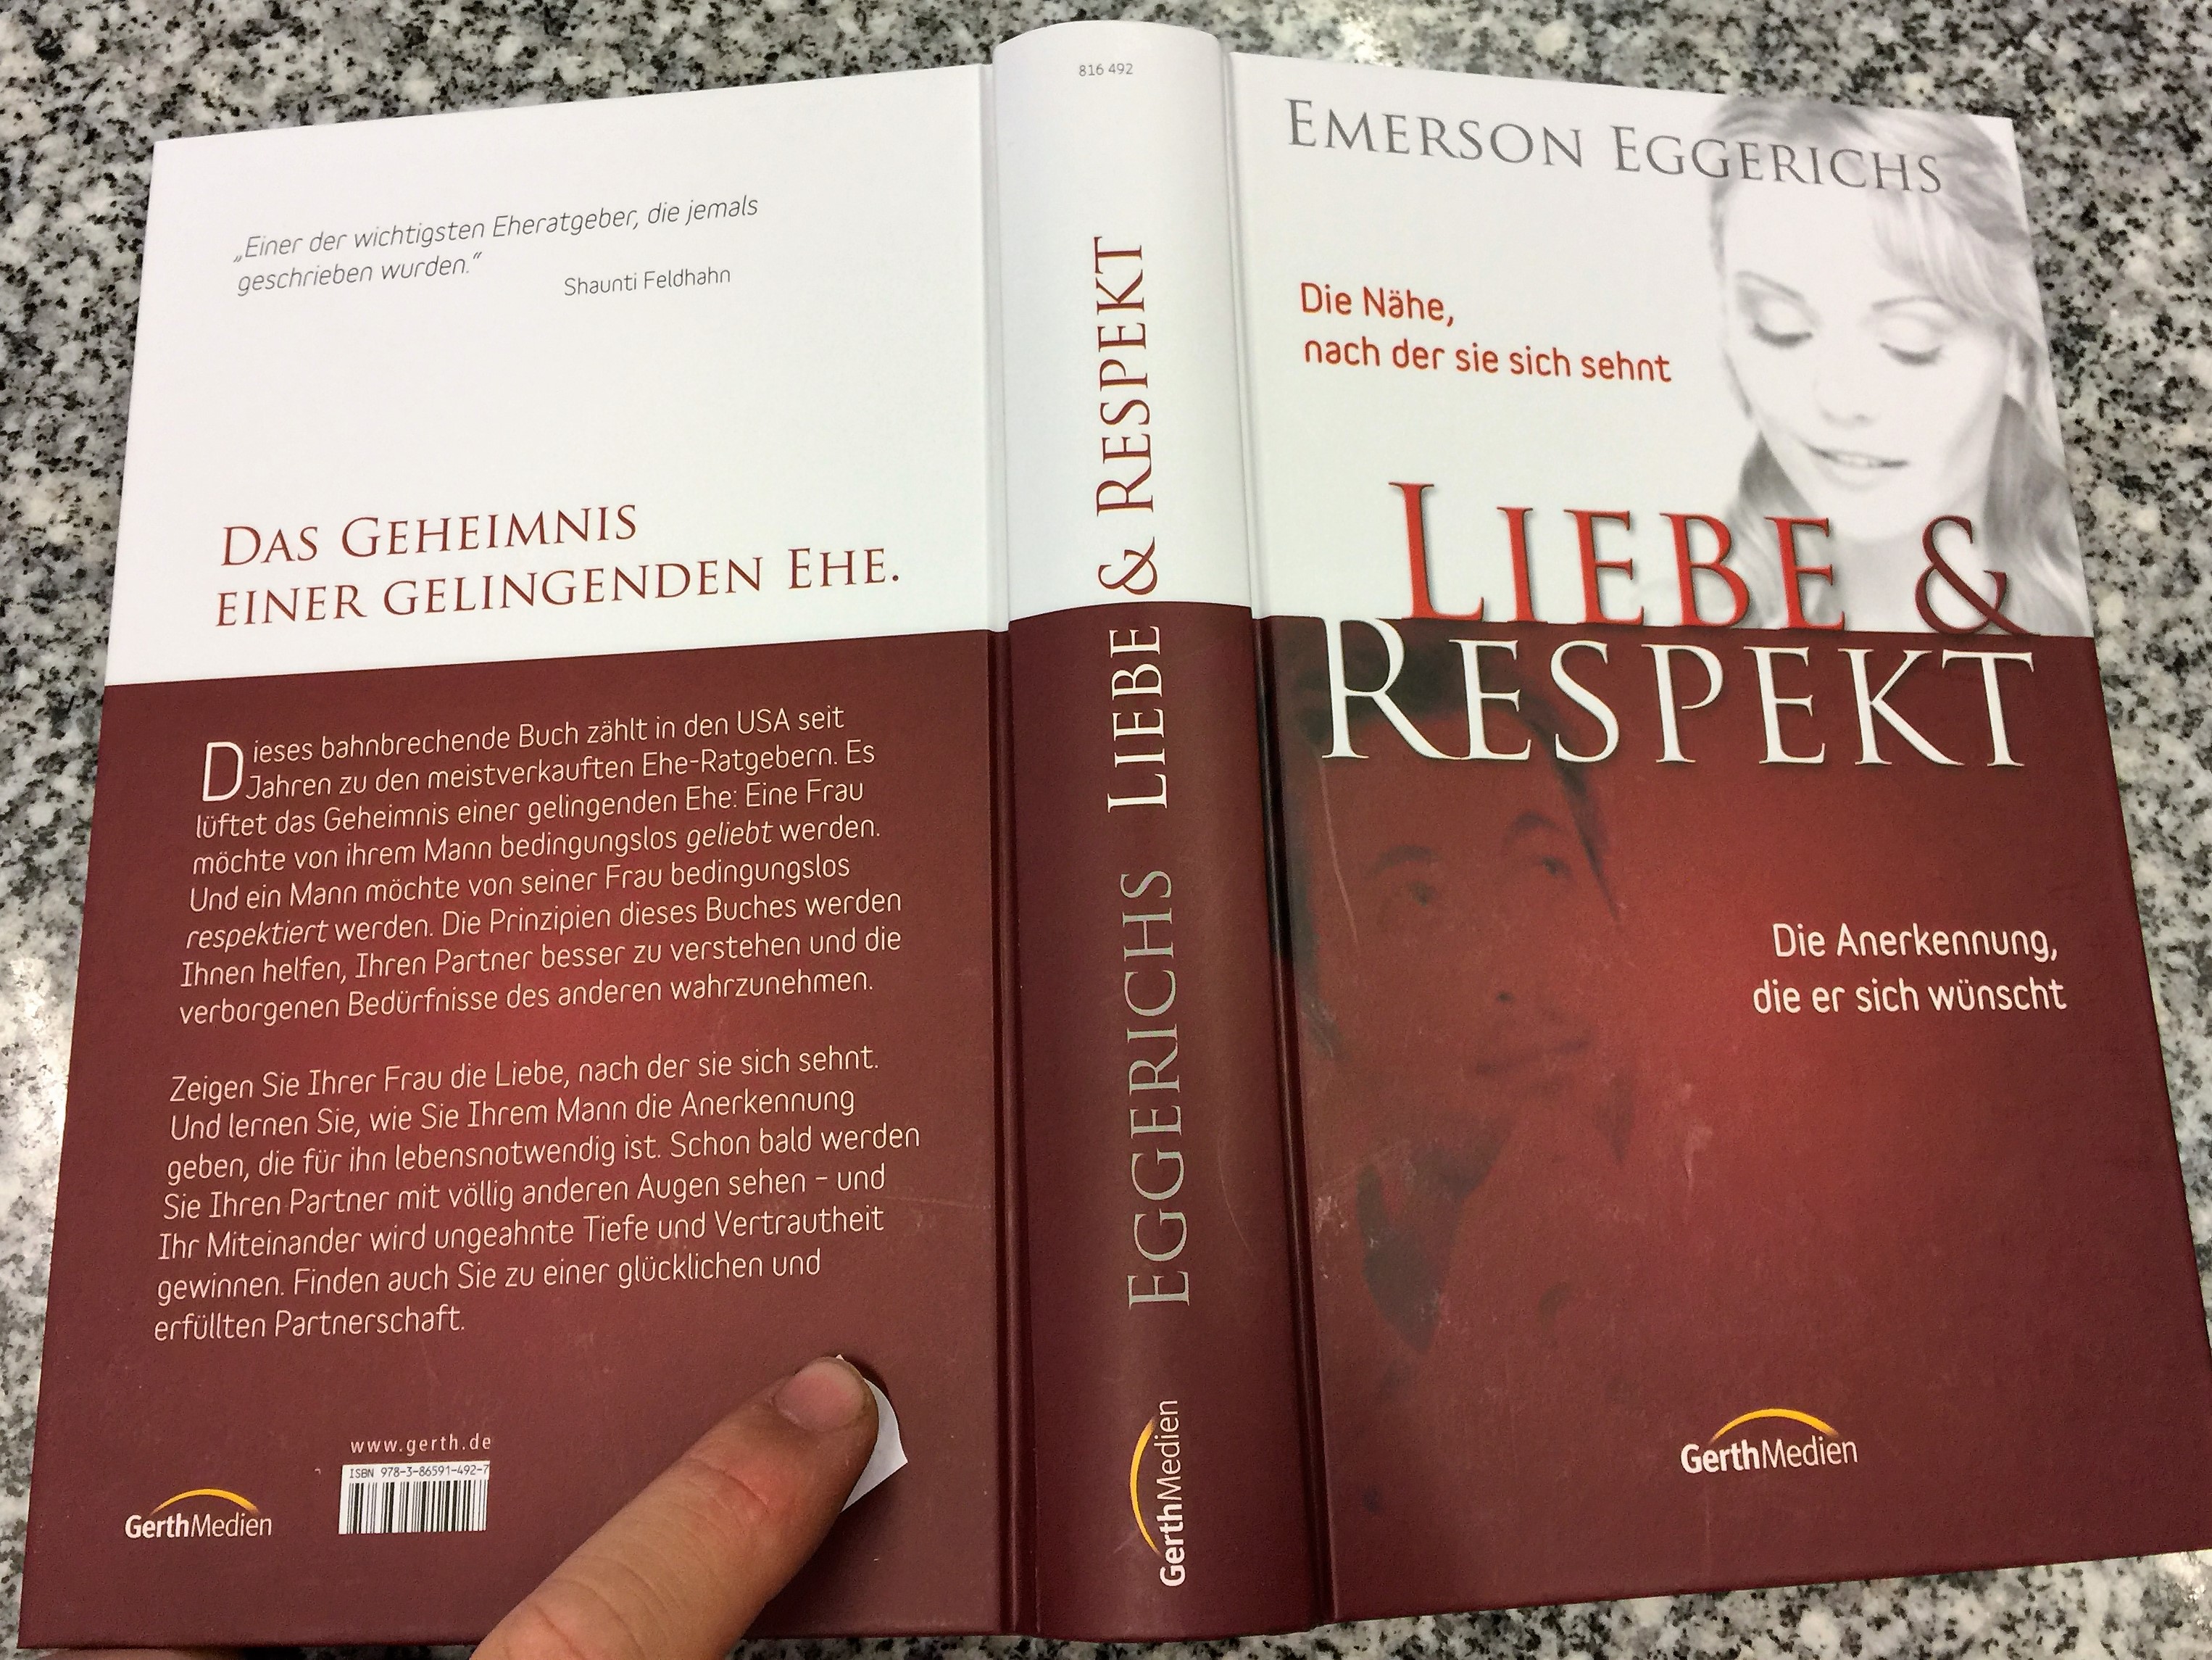 liebe-respekt-by-emerson-eggerichs-german-translation-of-love-and-respect-by-dr.-emerson-eggerich-2-.jpg